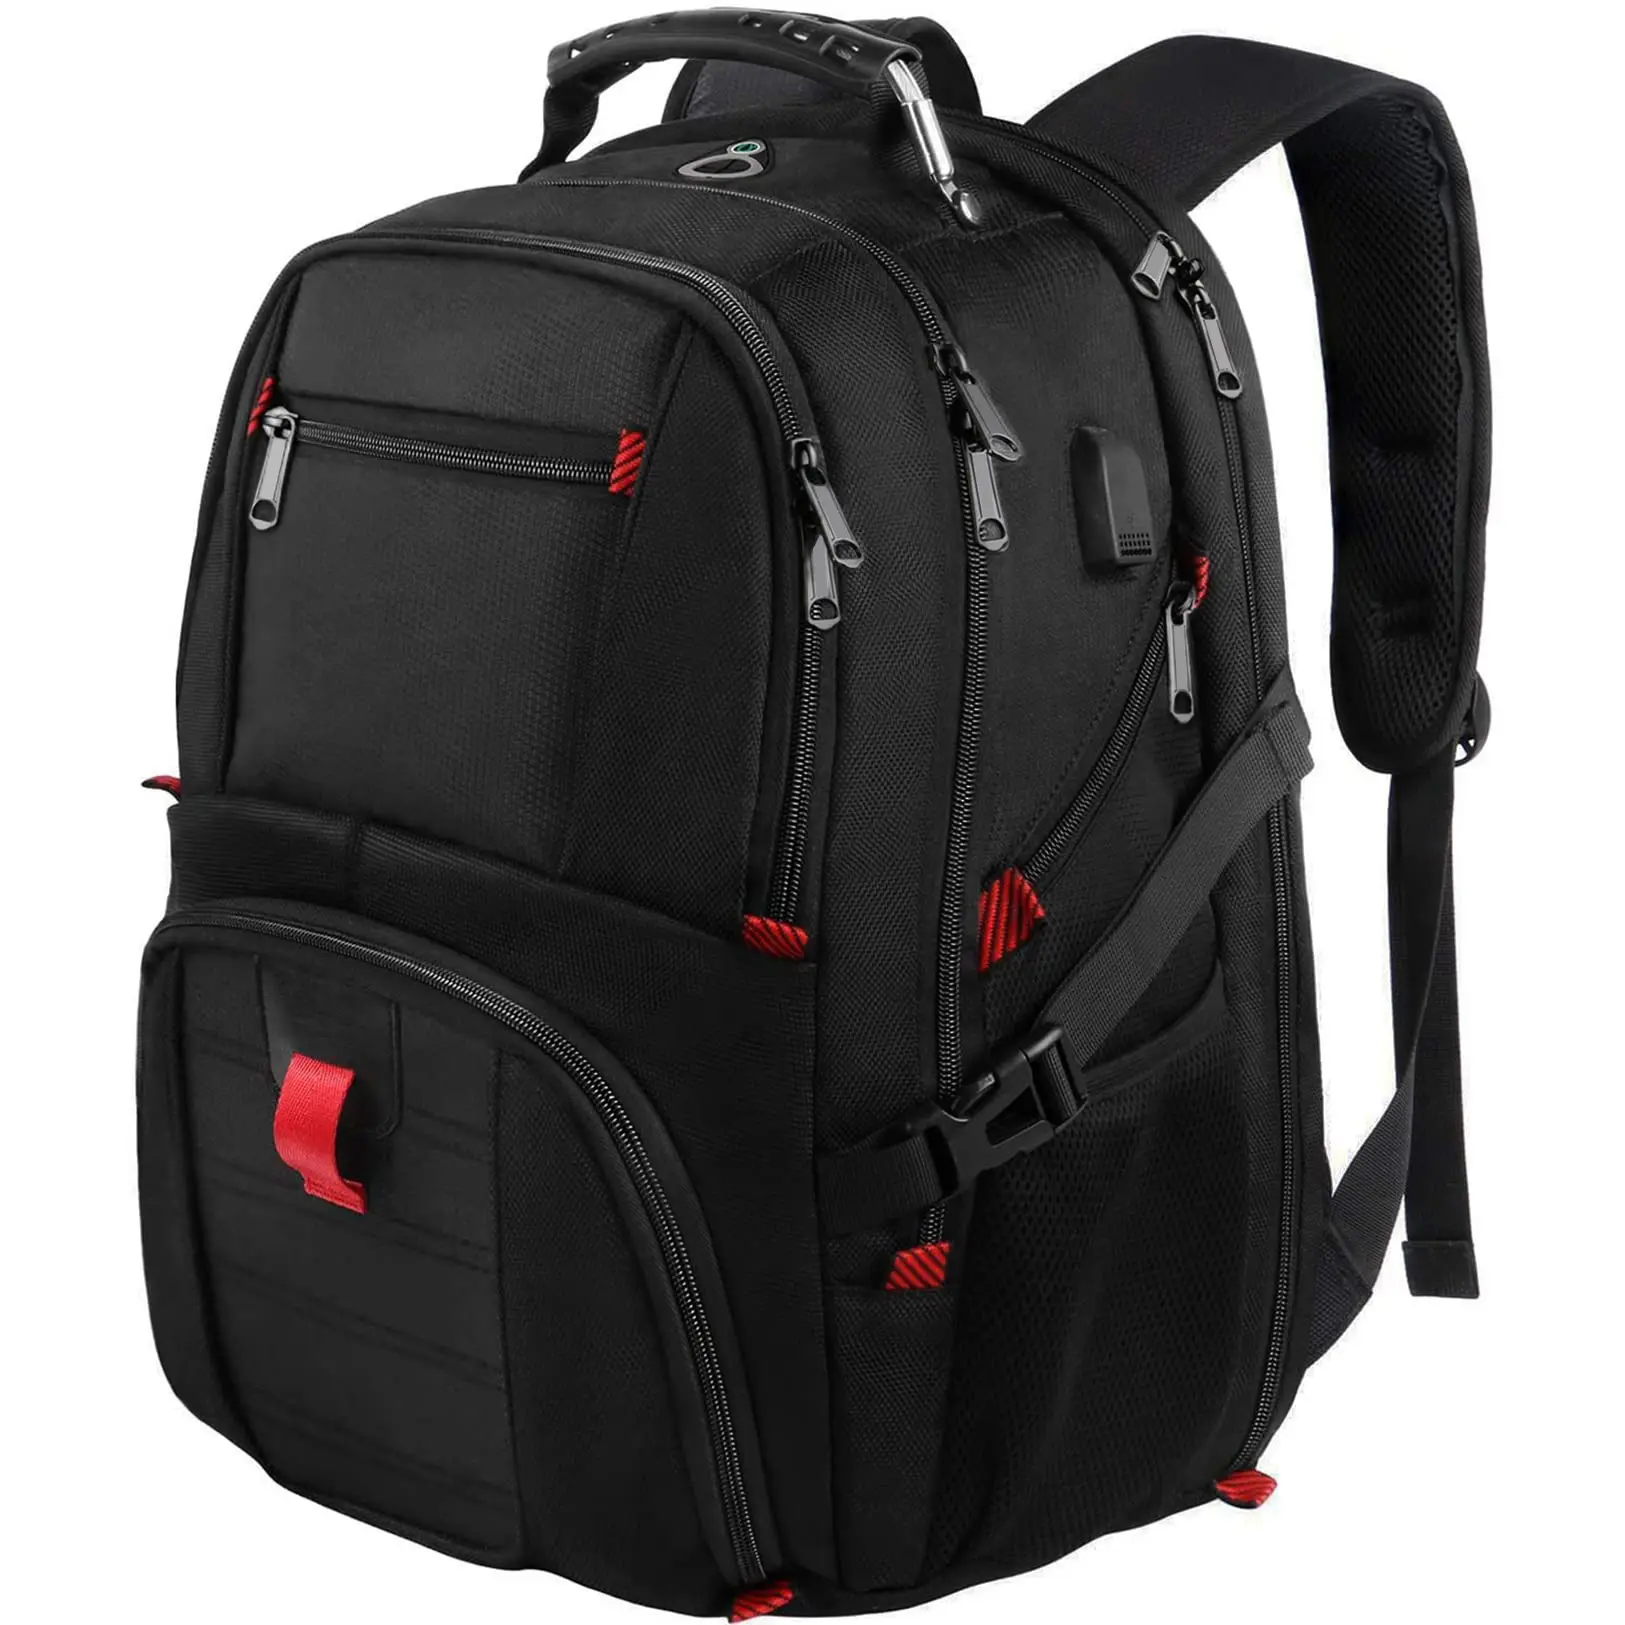 RU Extra Large Laptop Backpacks for Men Women College Backpack with USB Port Computer bag